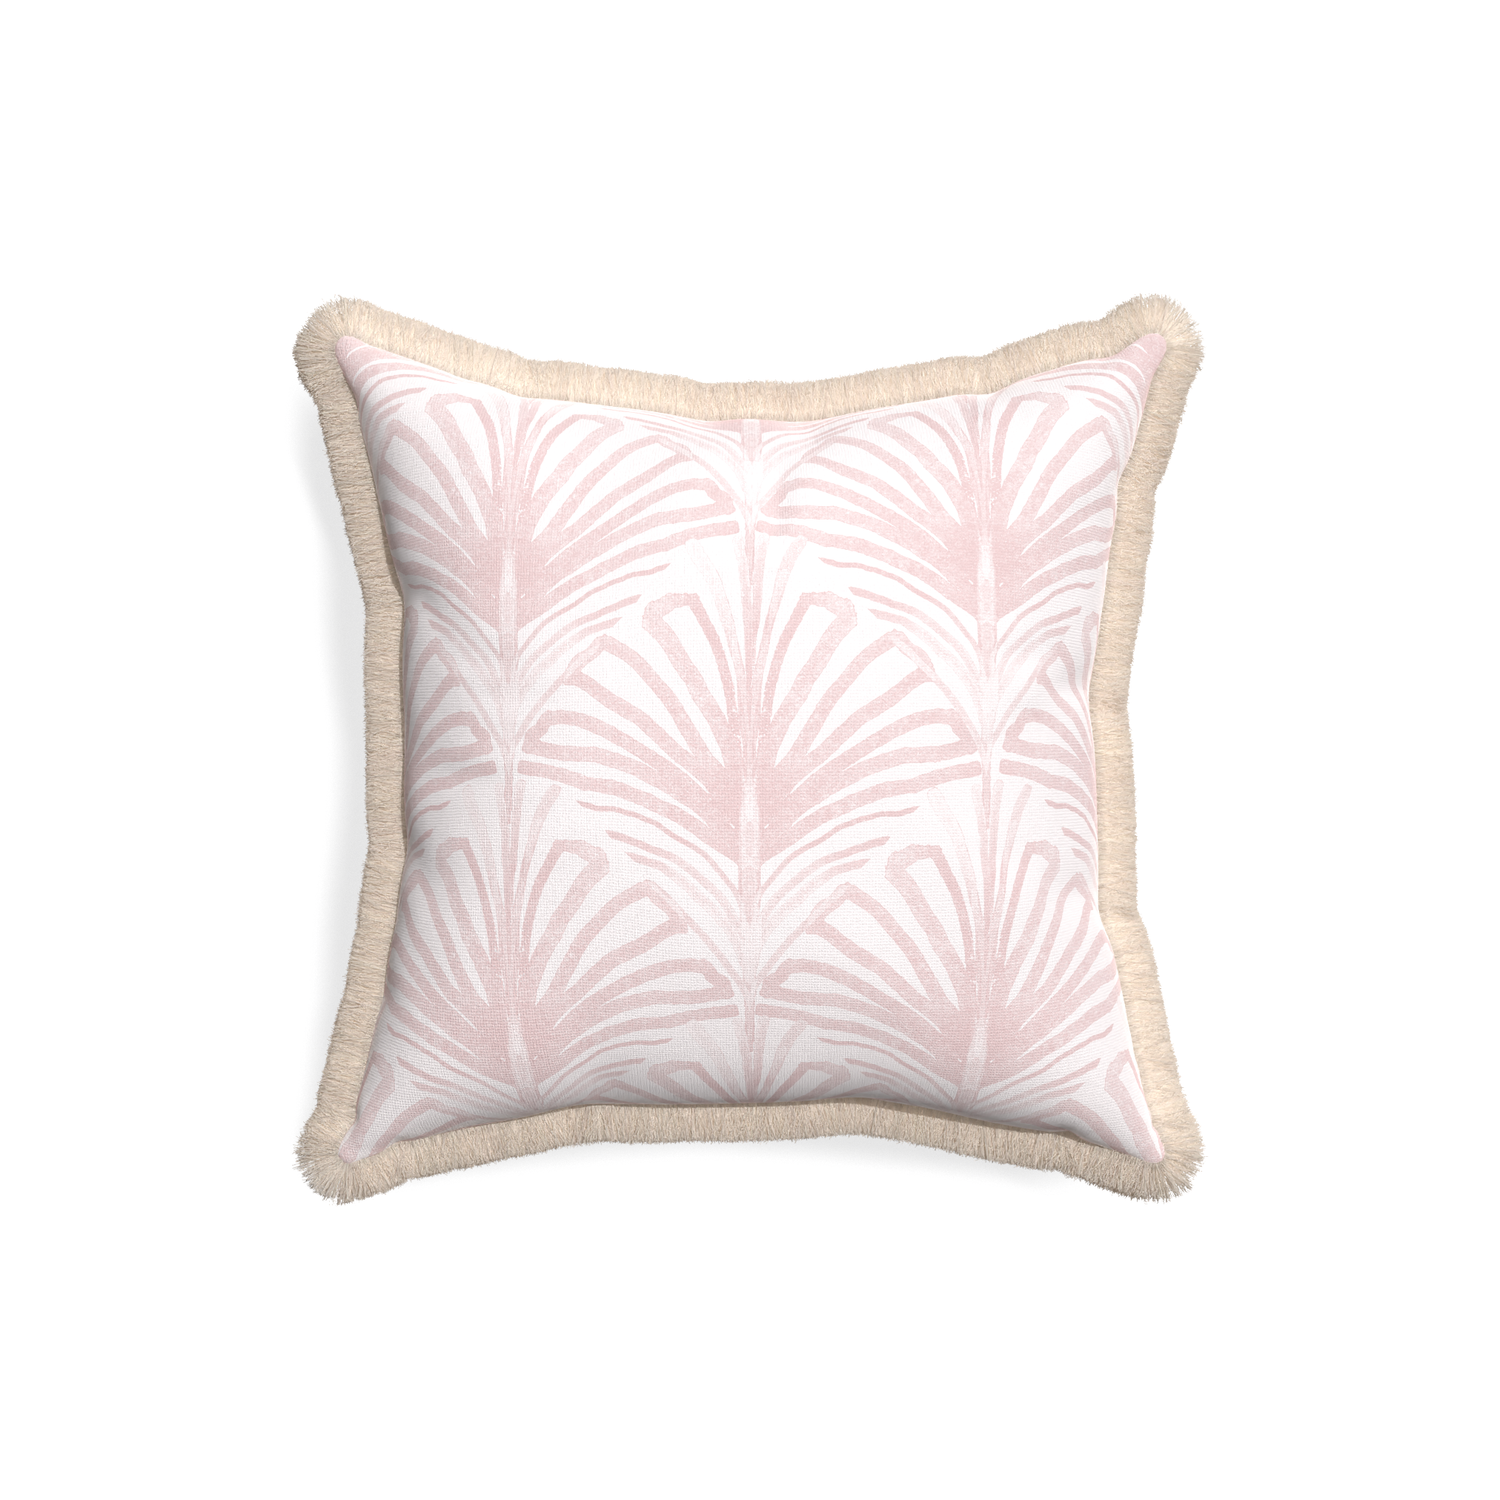 18-square suzy rose custom pillow with cream fringe on white background